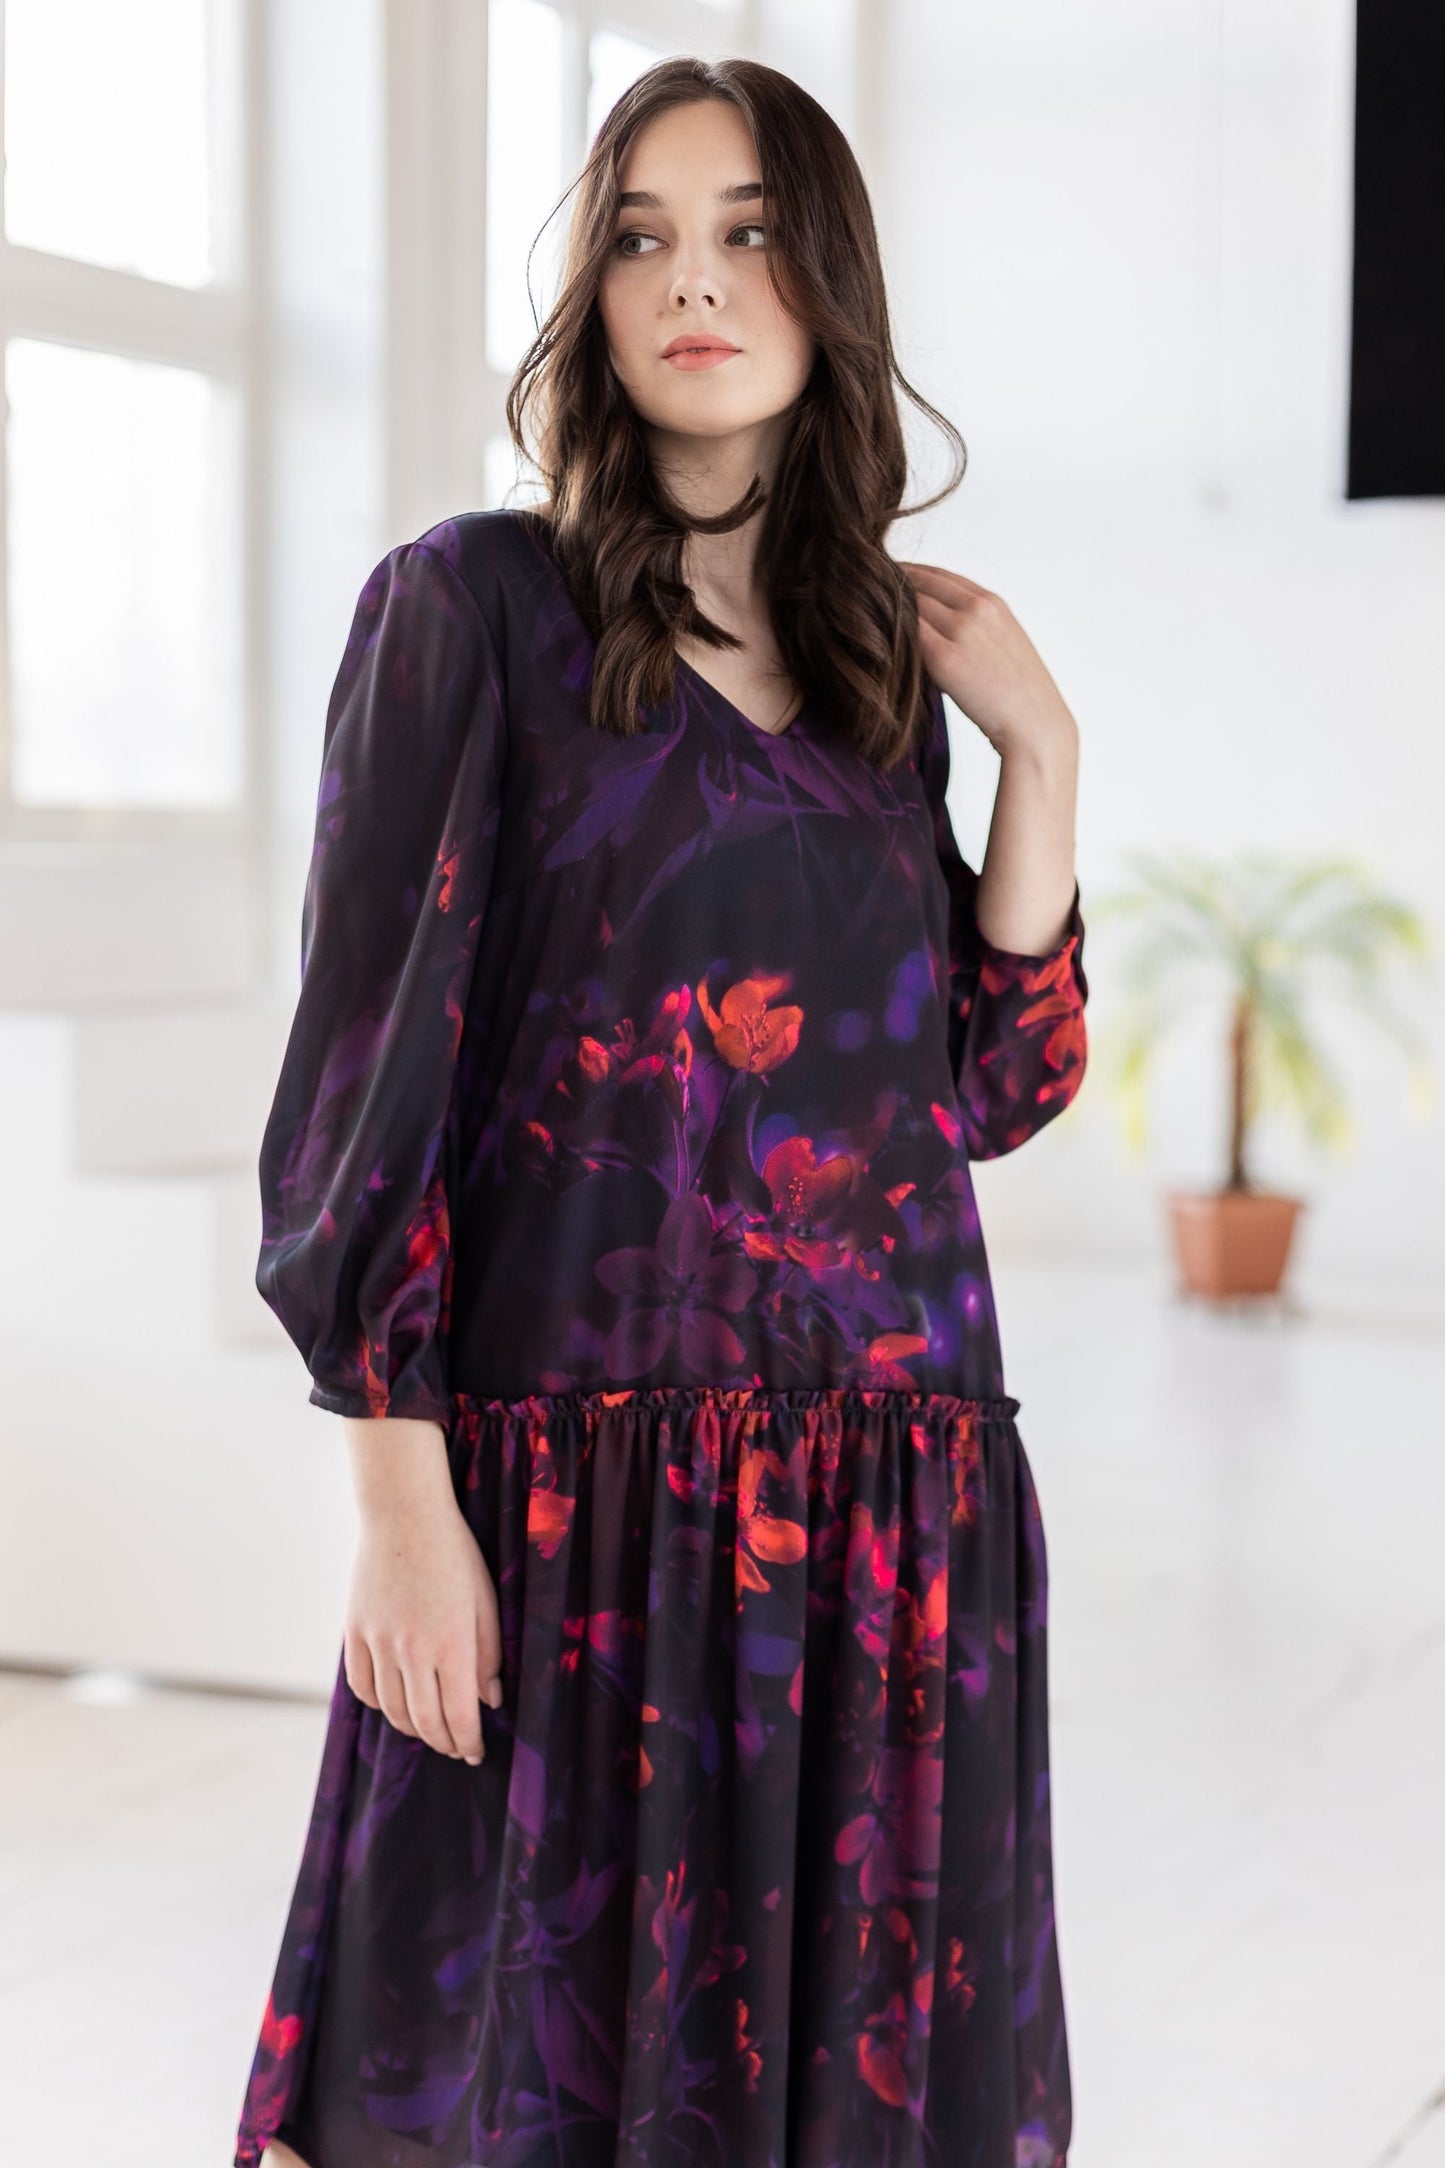 Dark purple chiffon dress with flowers